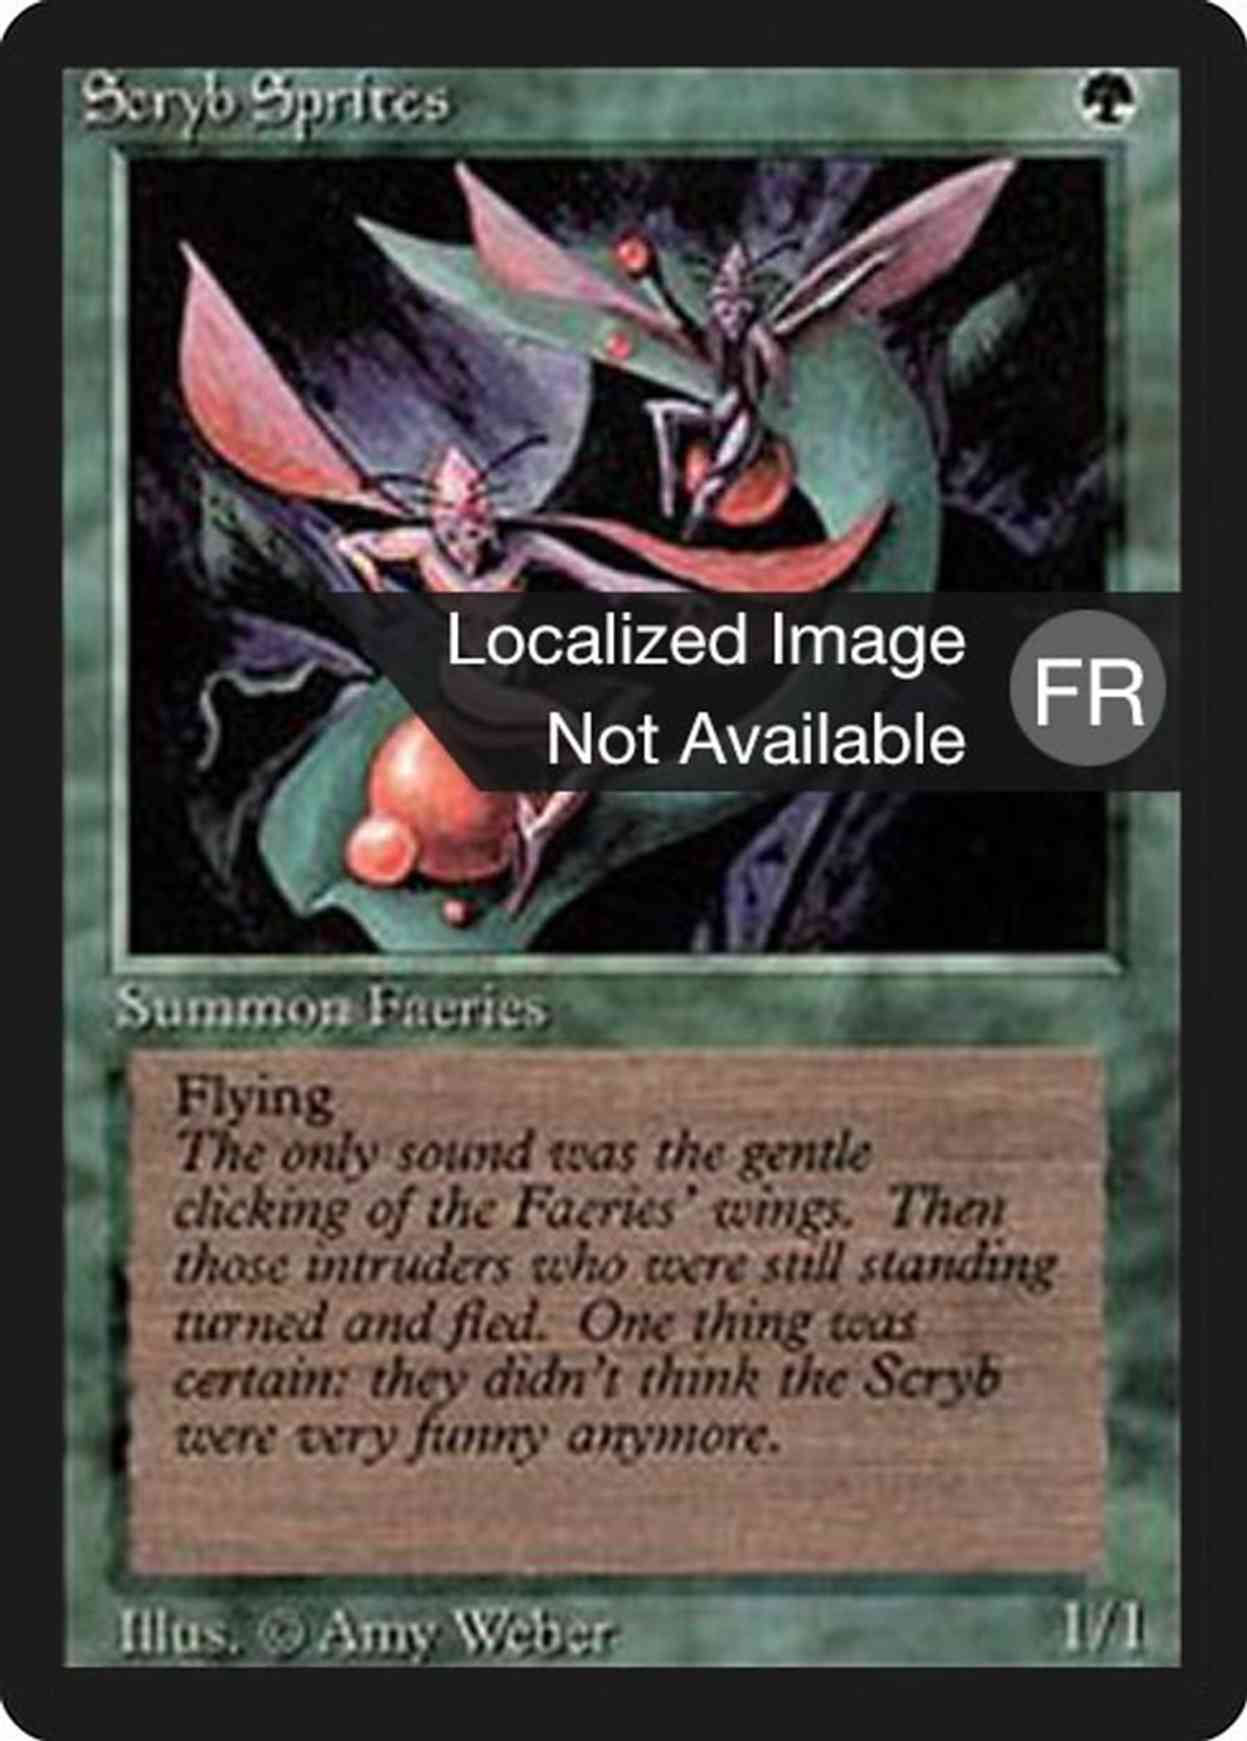 Scryb Sprites magic card front